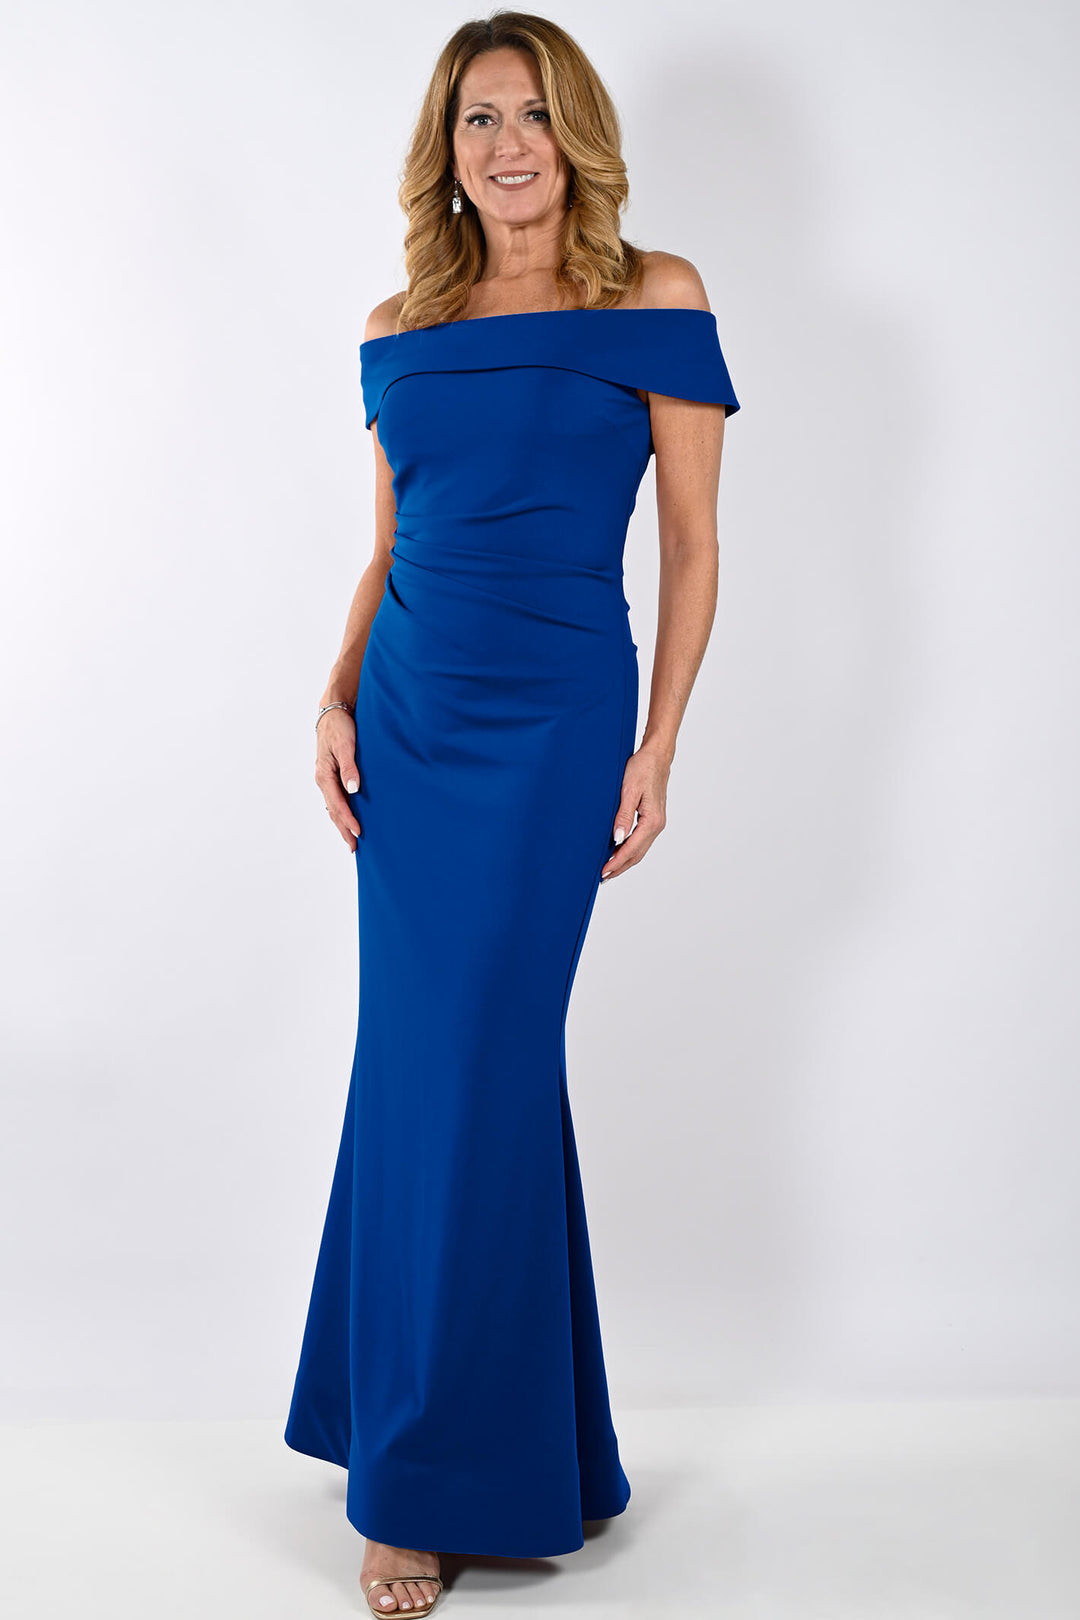 Lyman By Frank Lyman 239145 Royal Blue Off The Shoulder Evening Dress - Rouge Boutique